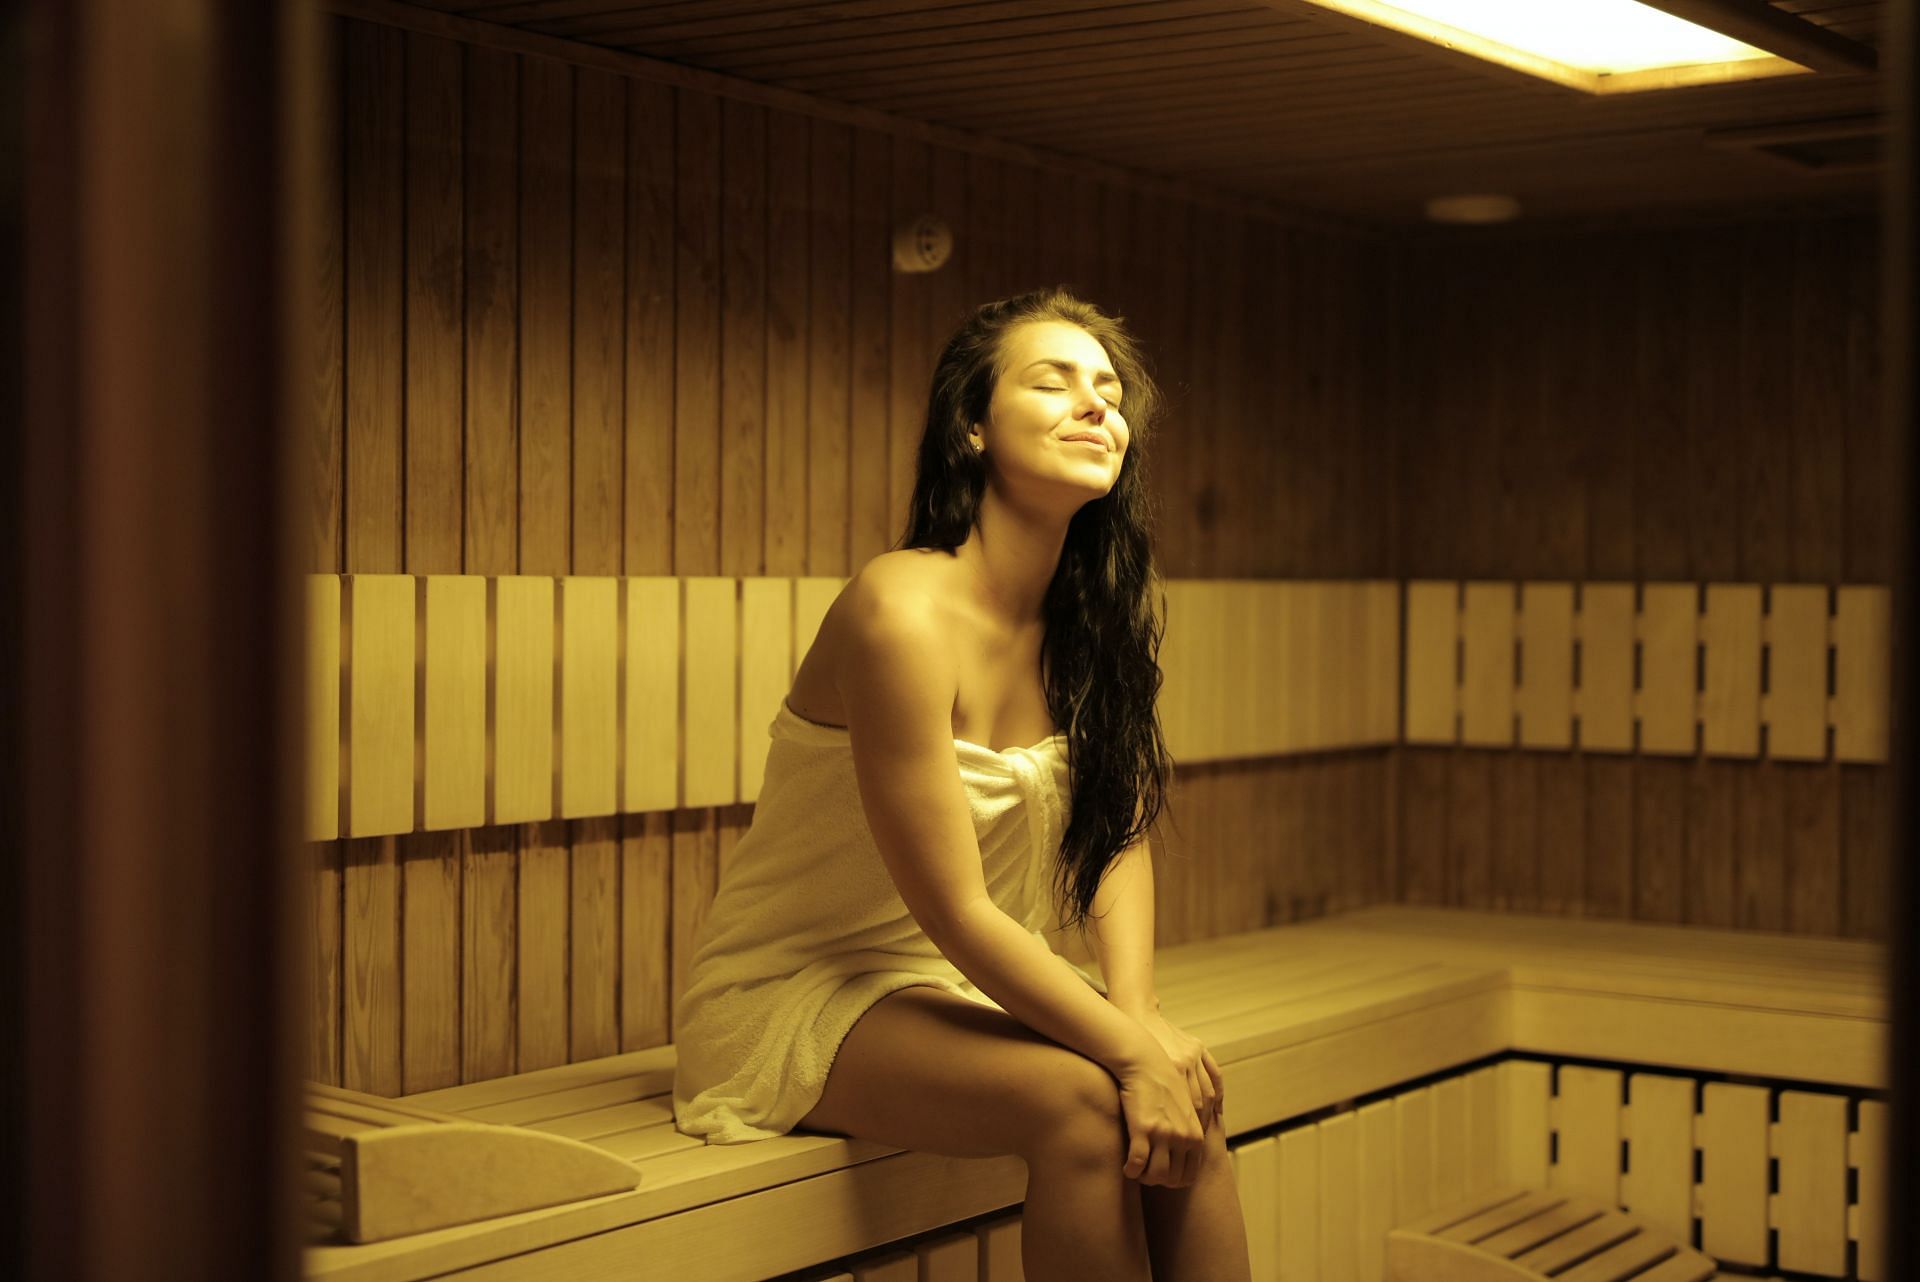 After workout sauna improves mood and reduces stress. (Image via Pexels/ Andrea Piacquadio)